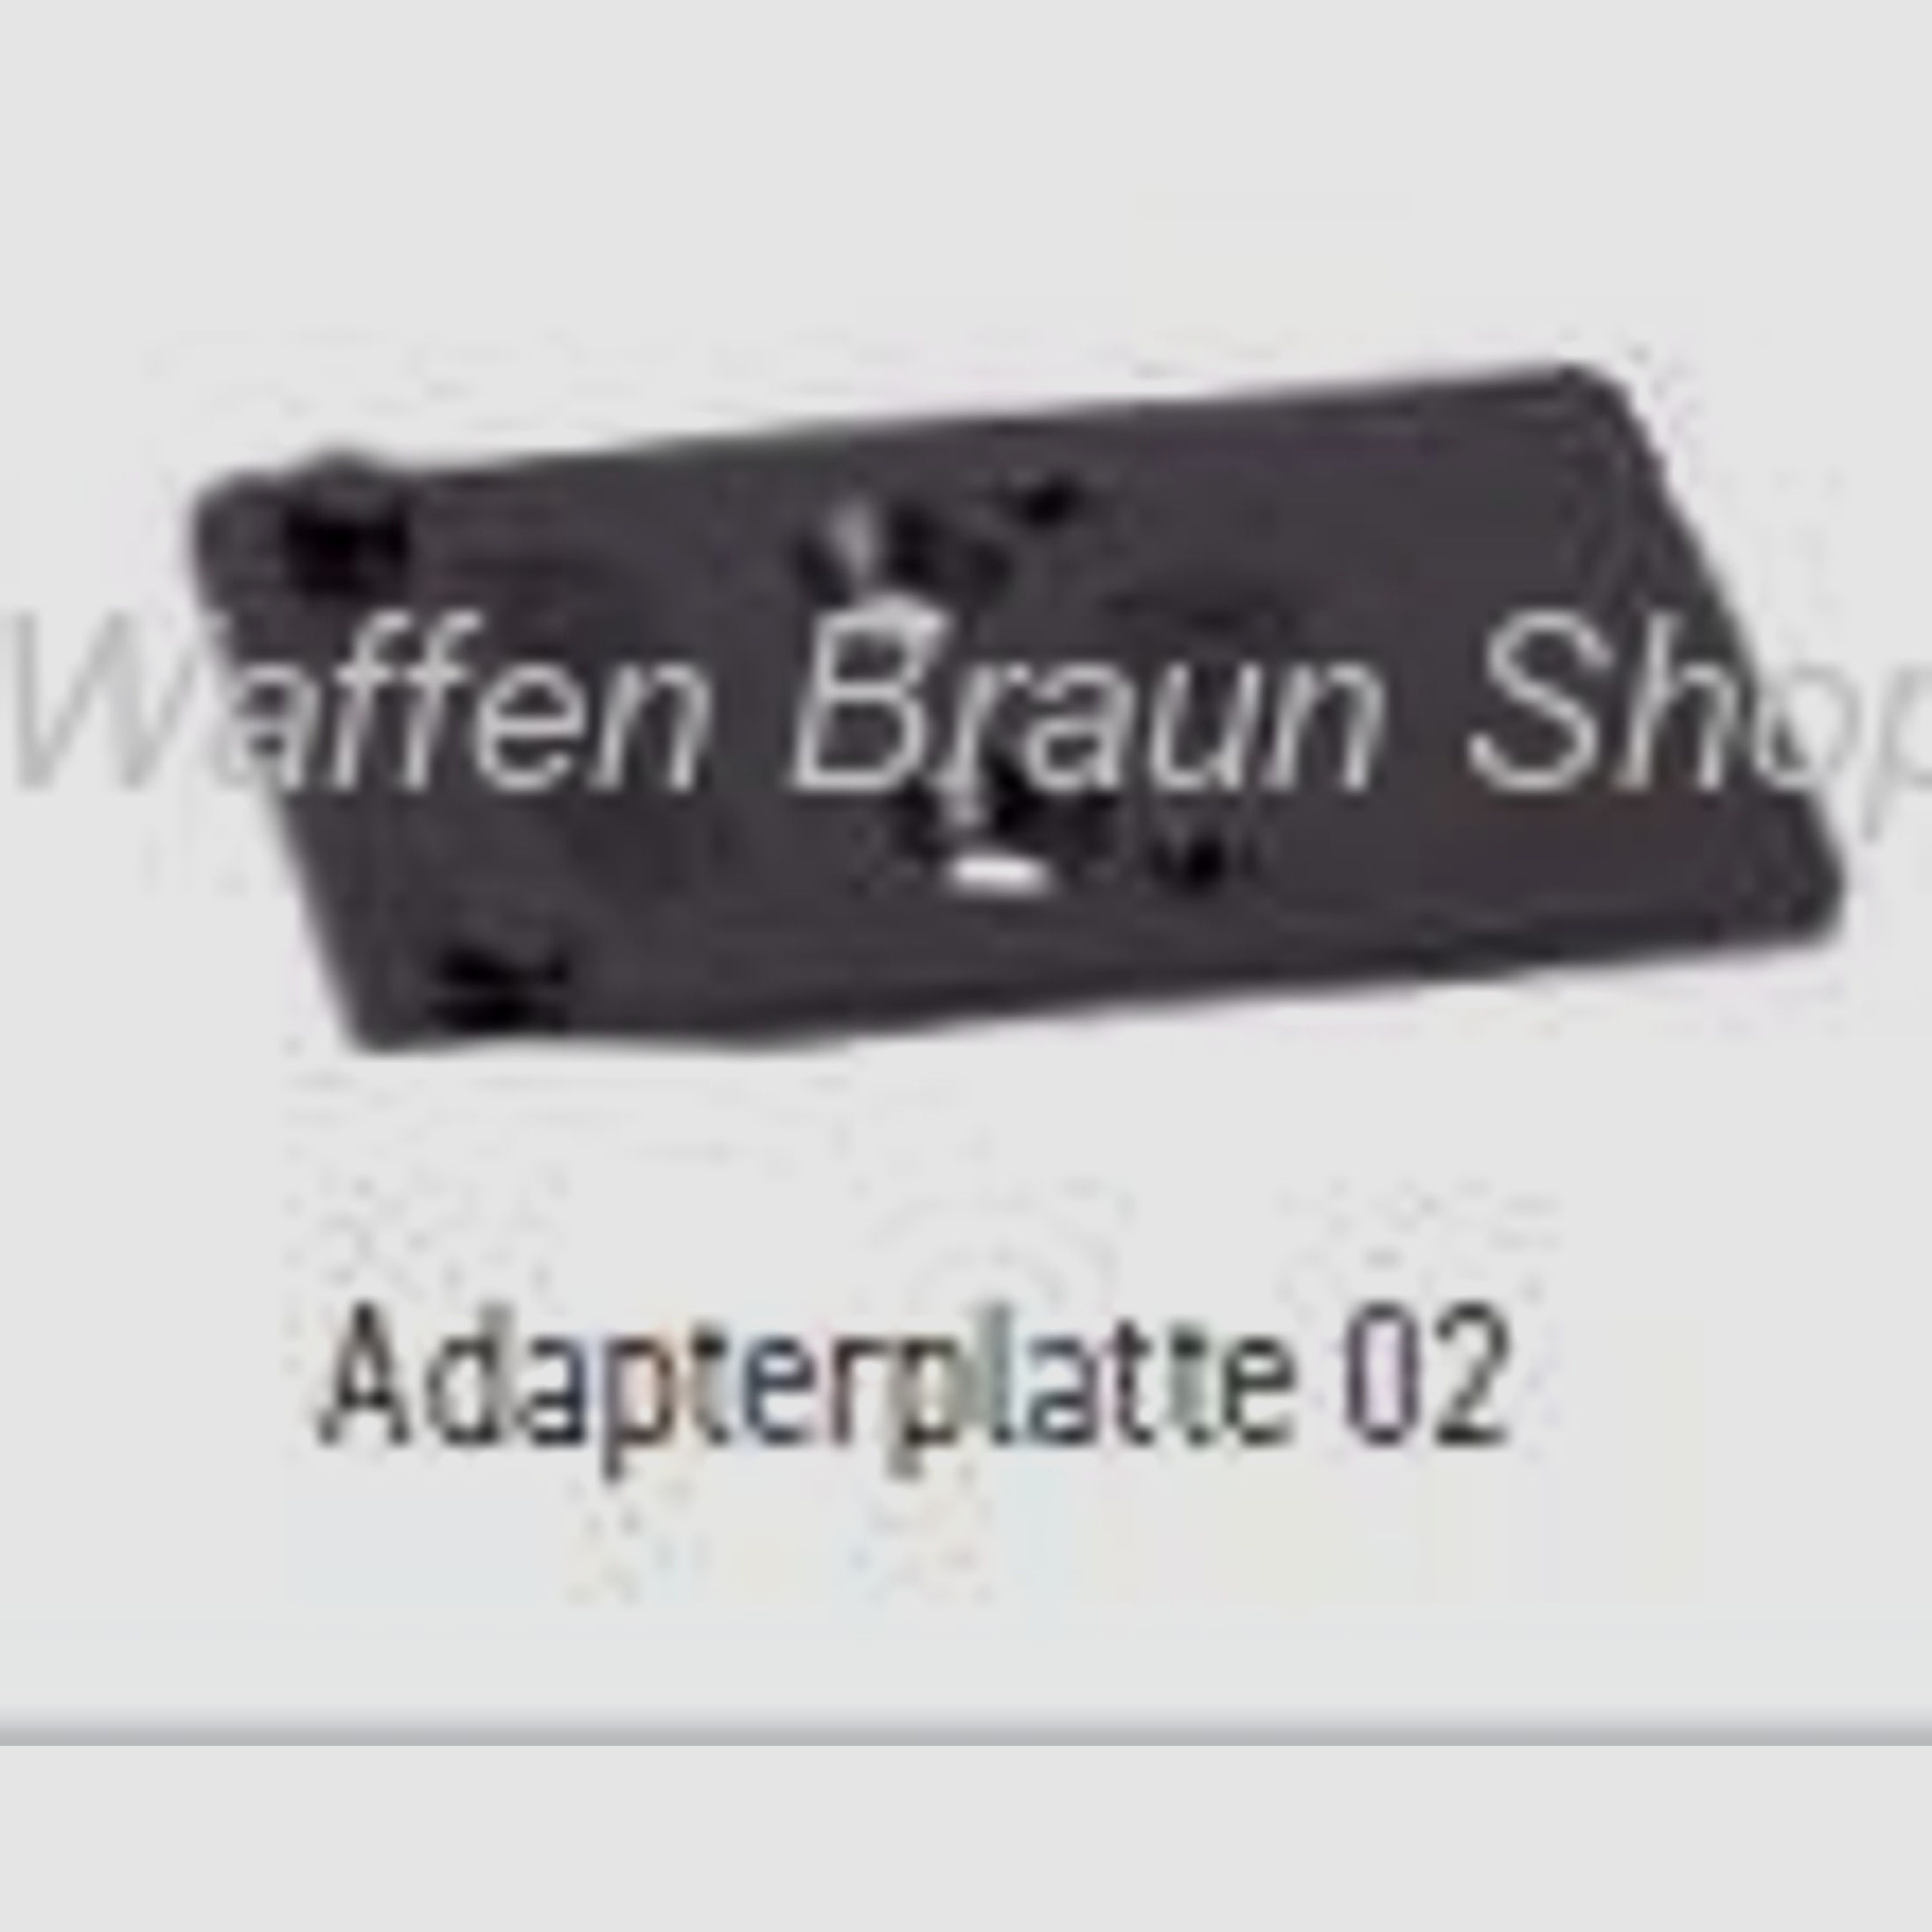 Adapterplatte 02 für z.B. Trijicon RMR u. SRO, Holosun 507C/407C/508T, Riton, Axion für Walther PDP